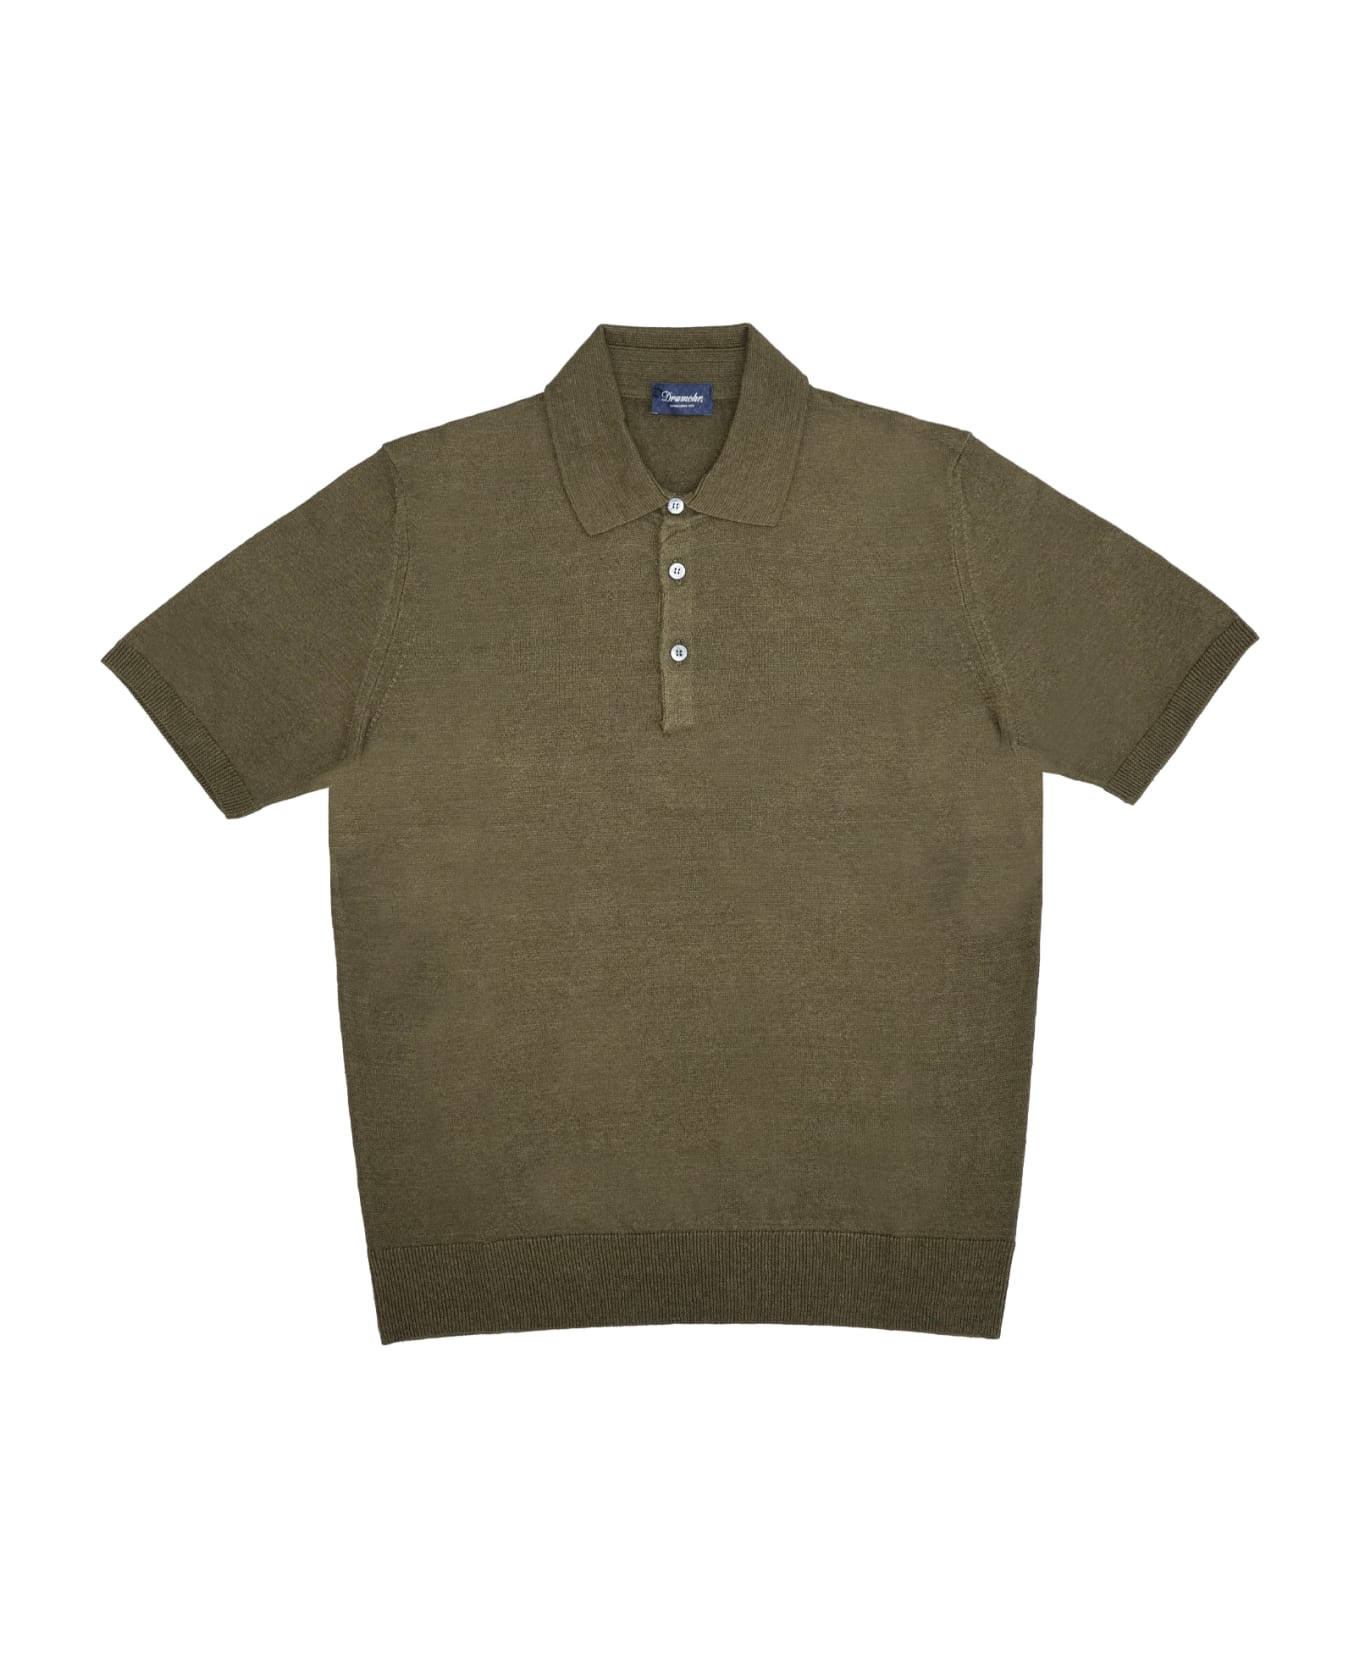 Drumohr Polo Shirt - Green